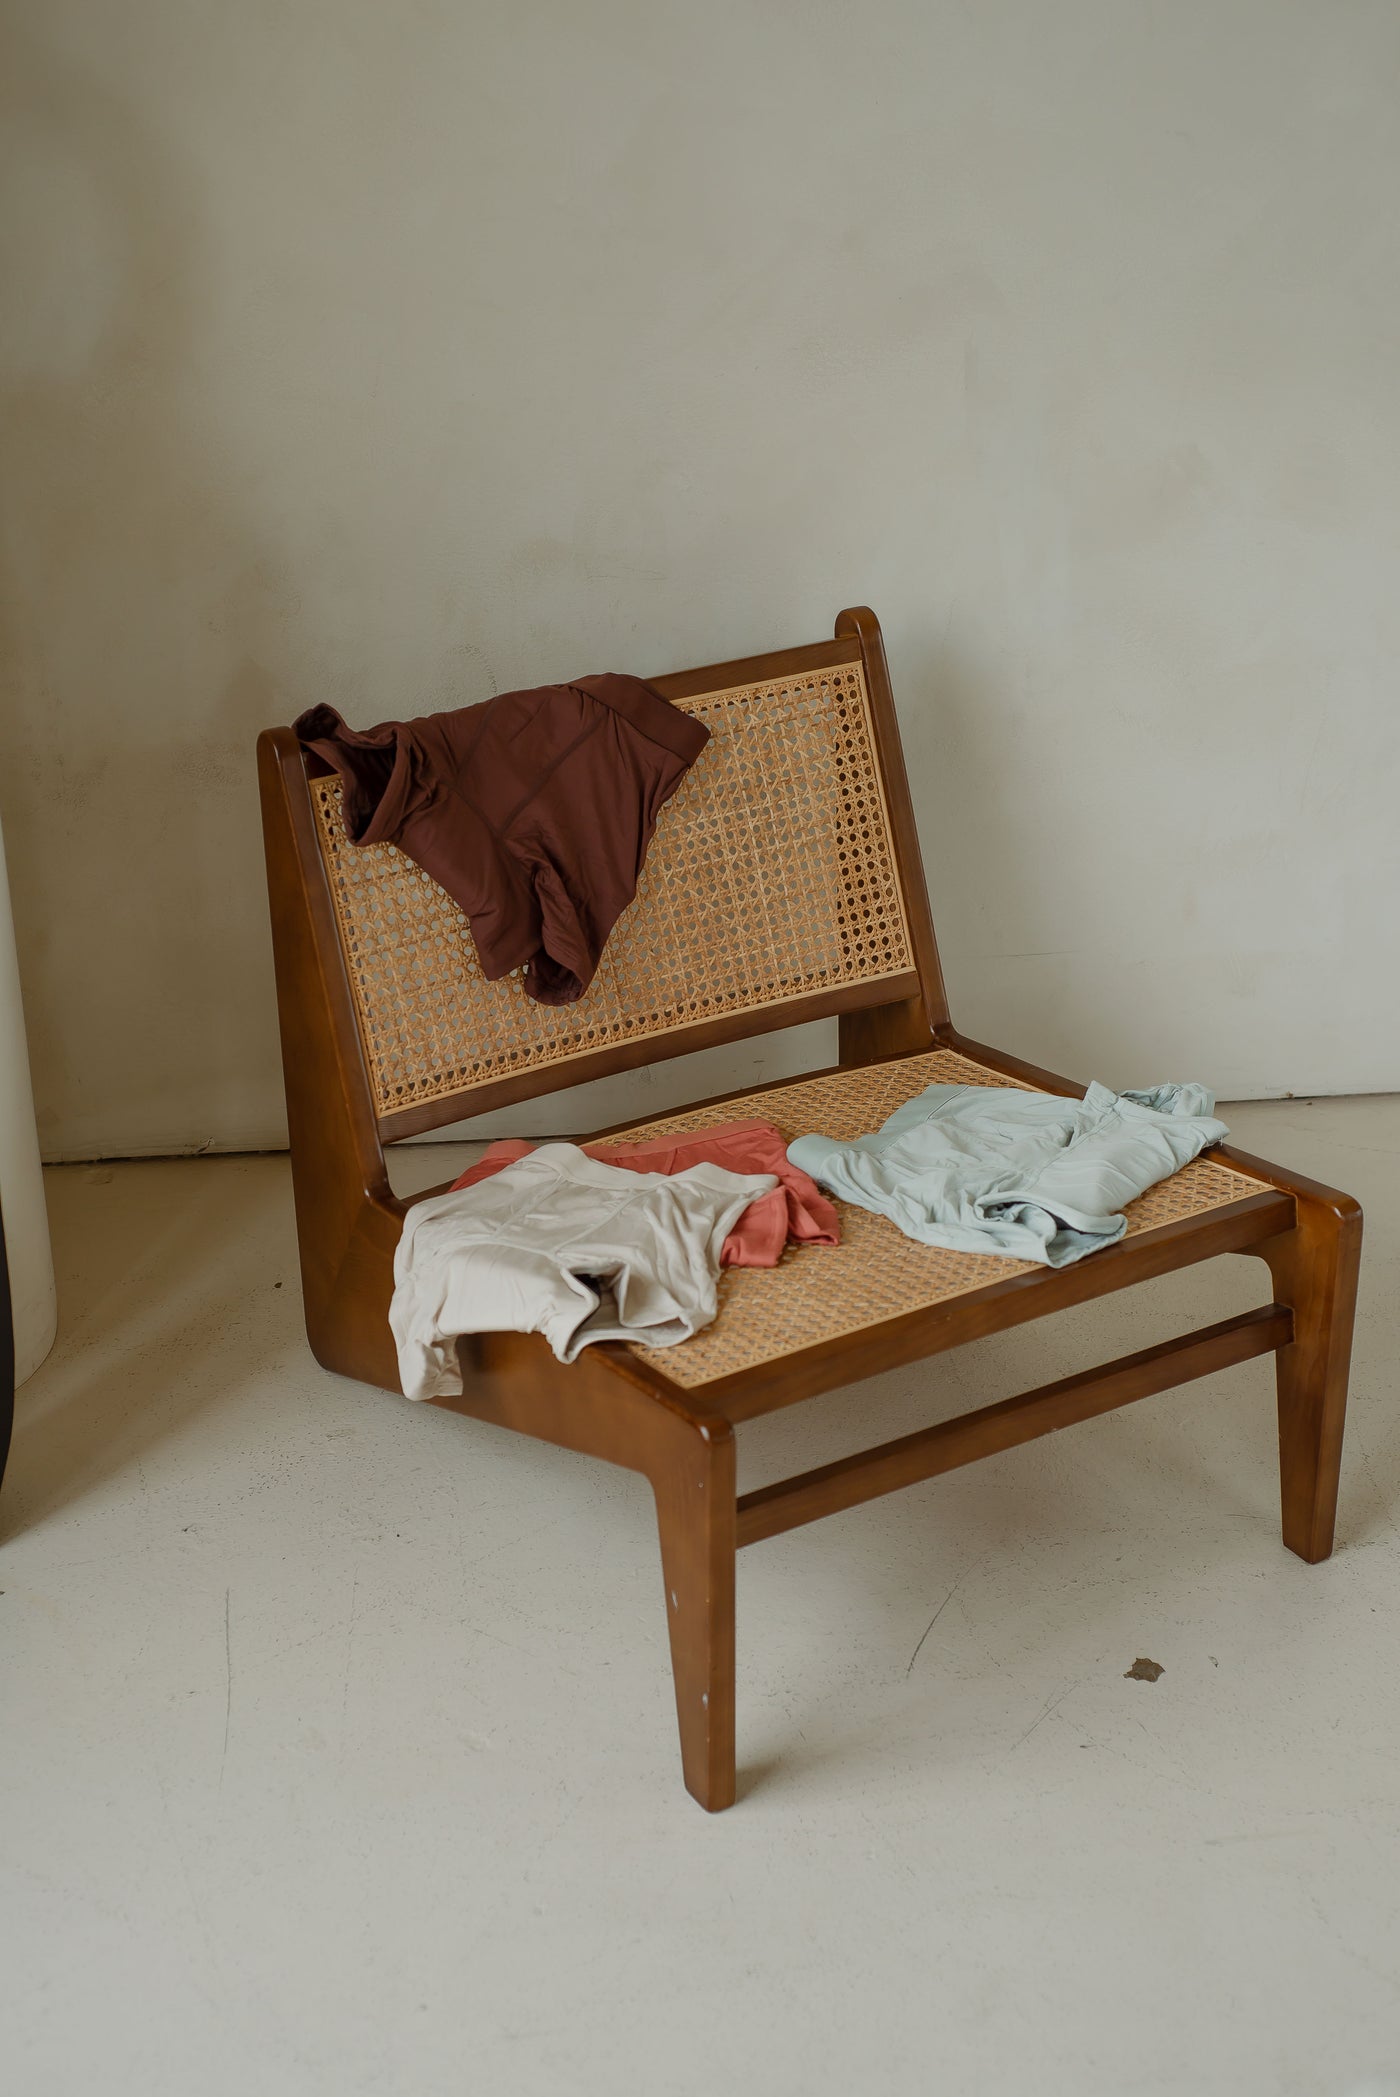 Revol Cares period underwear on a wicker chair